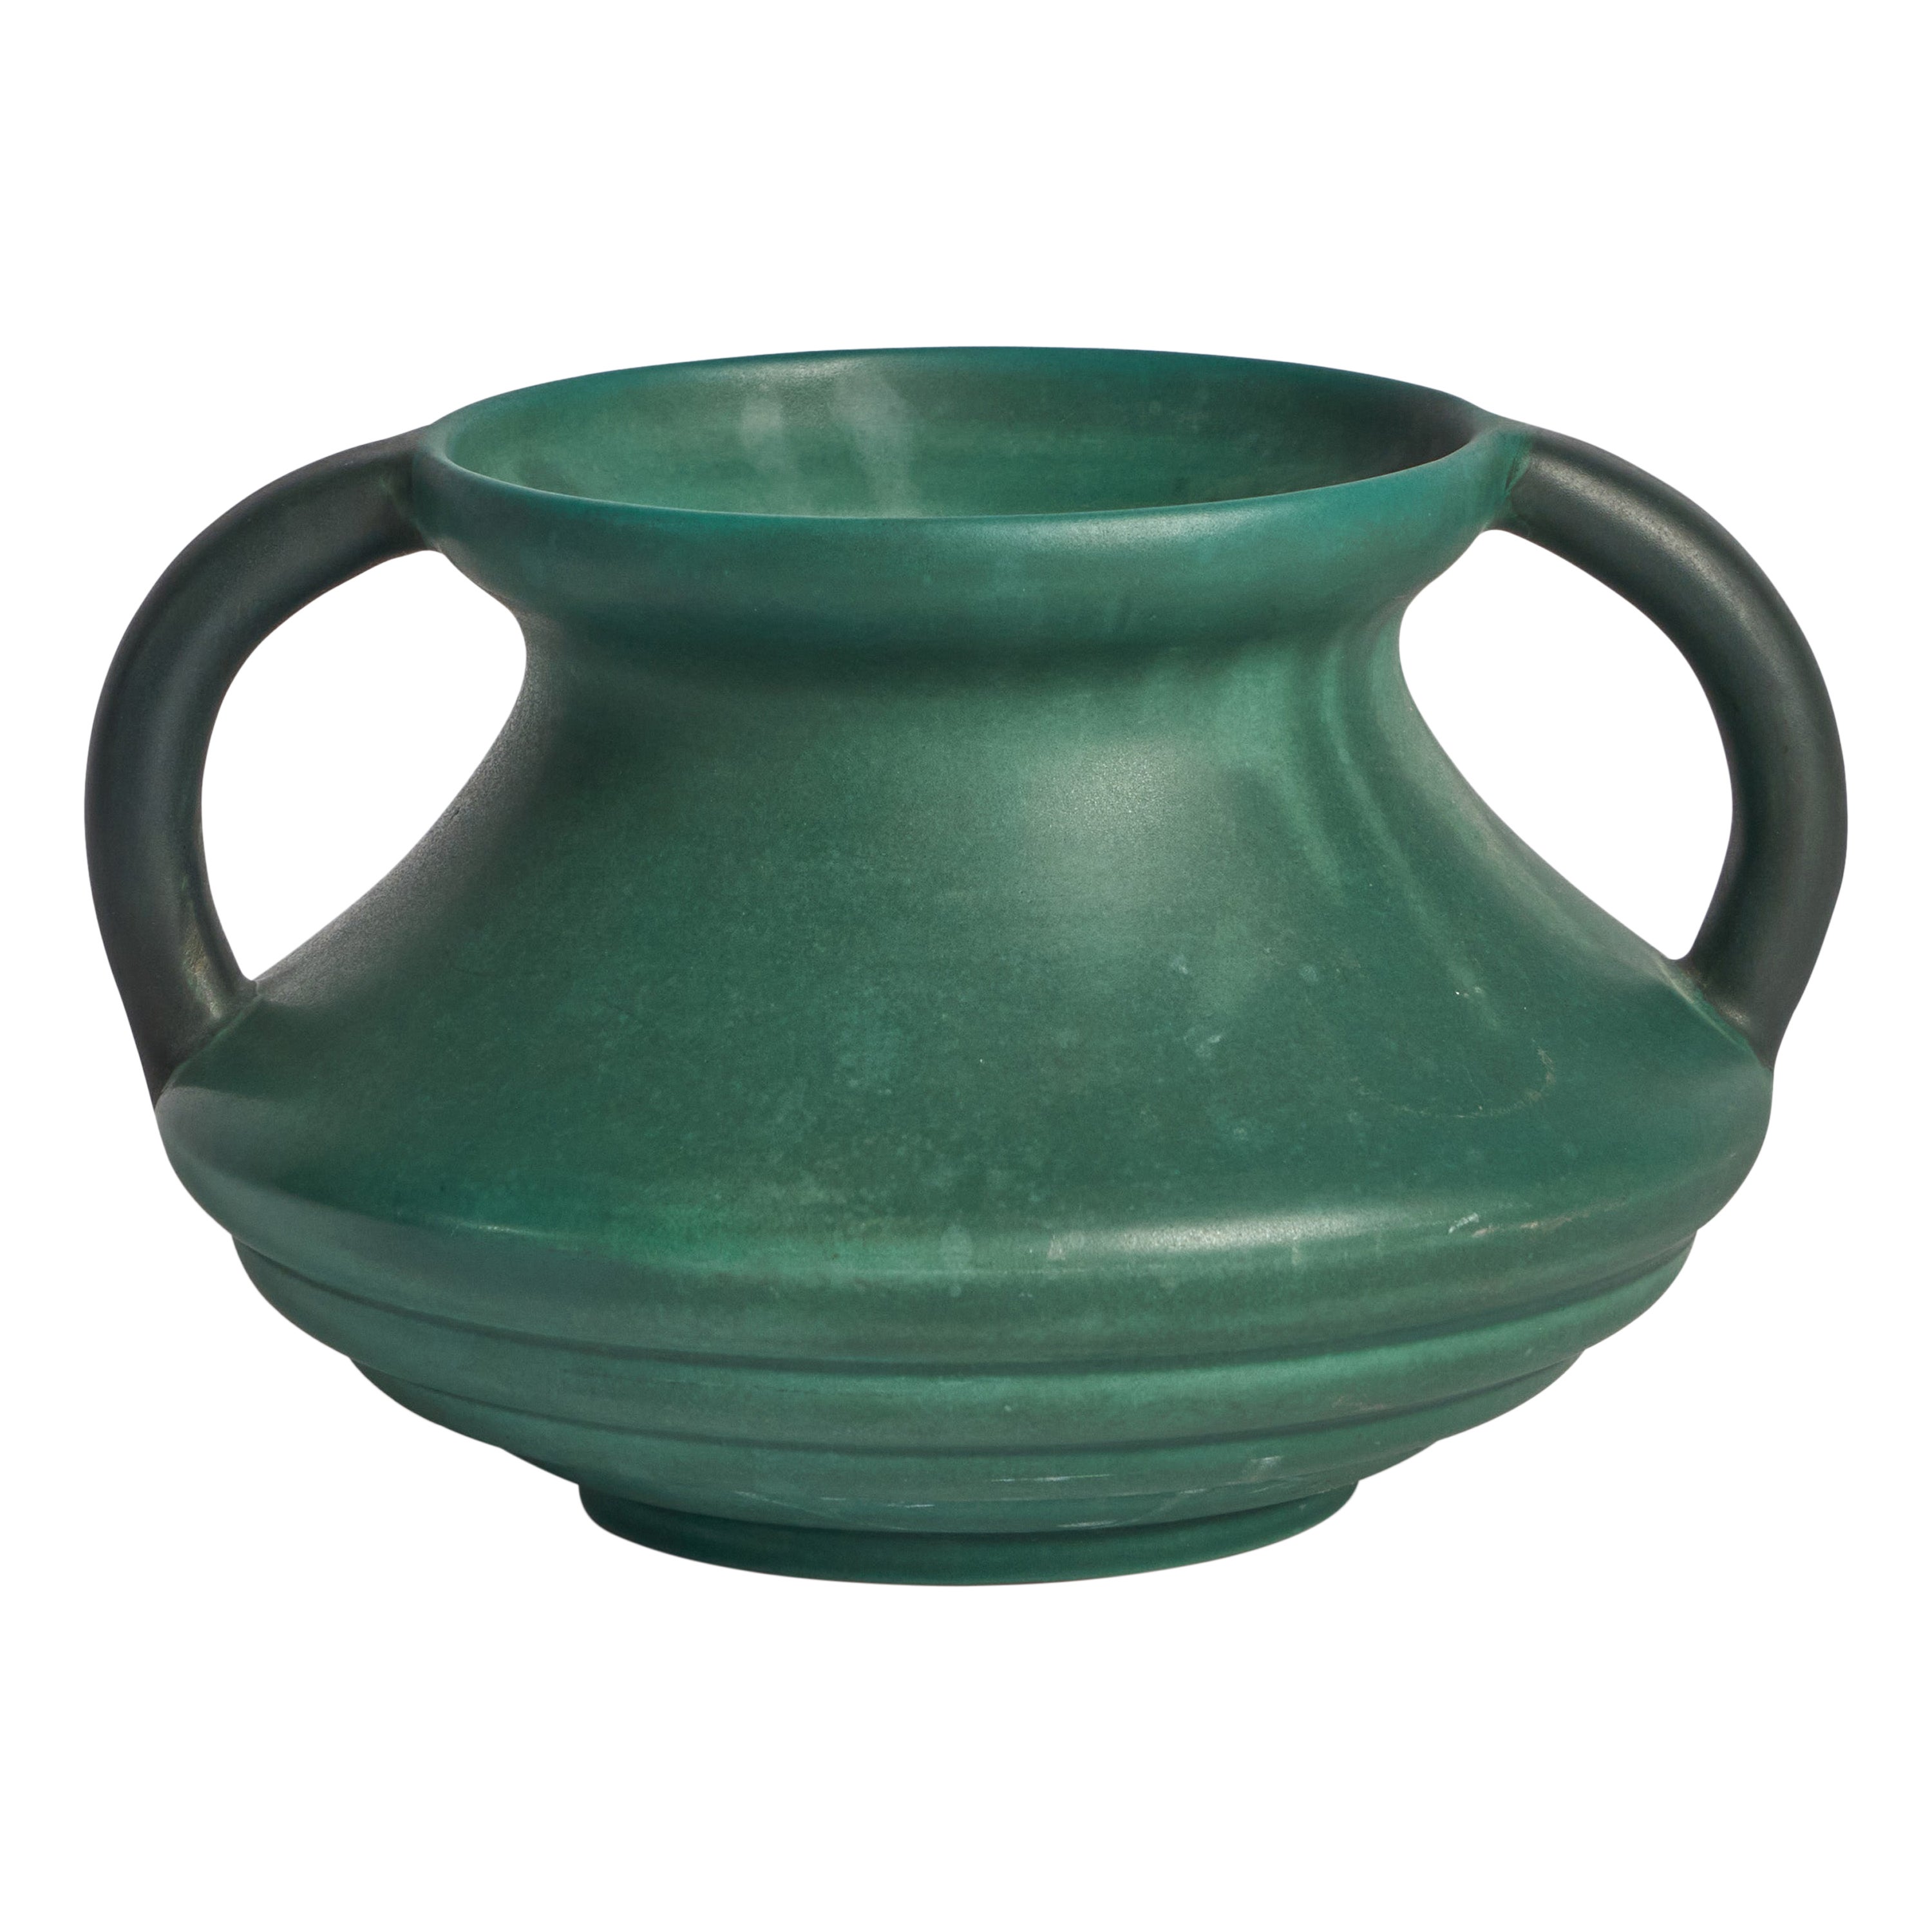 Höganäs Keramik, vase, grès, Suède, années 1930